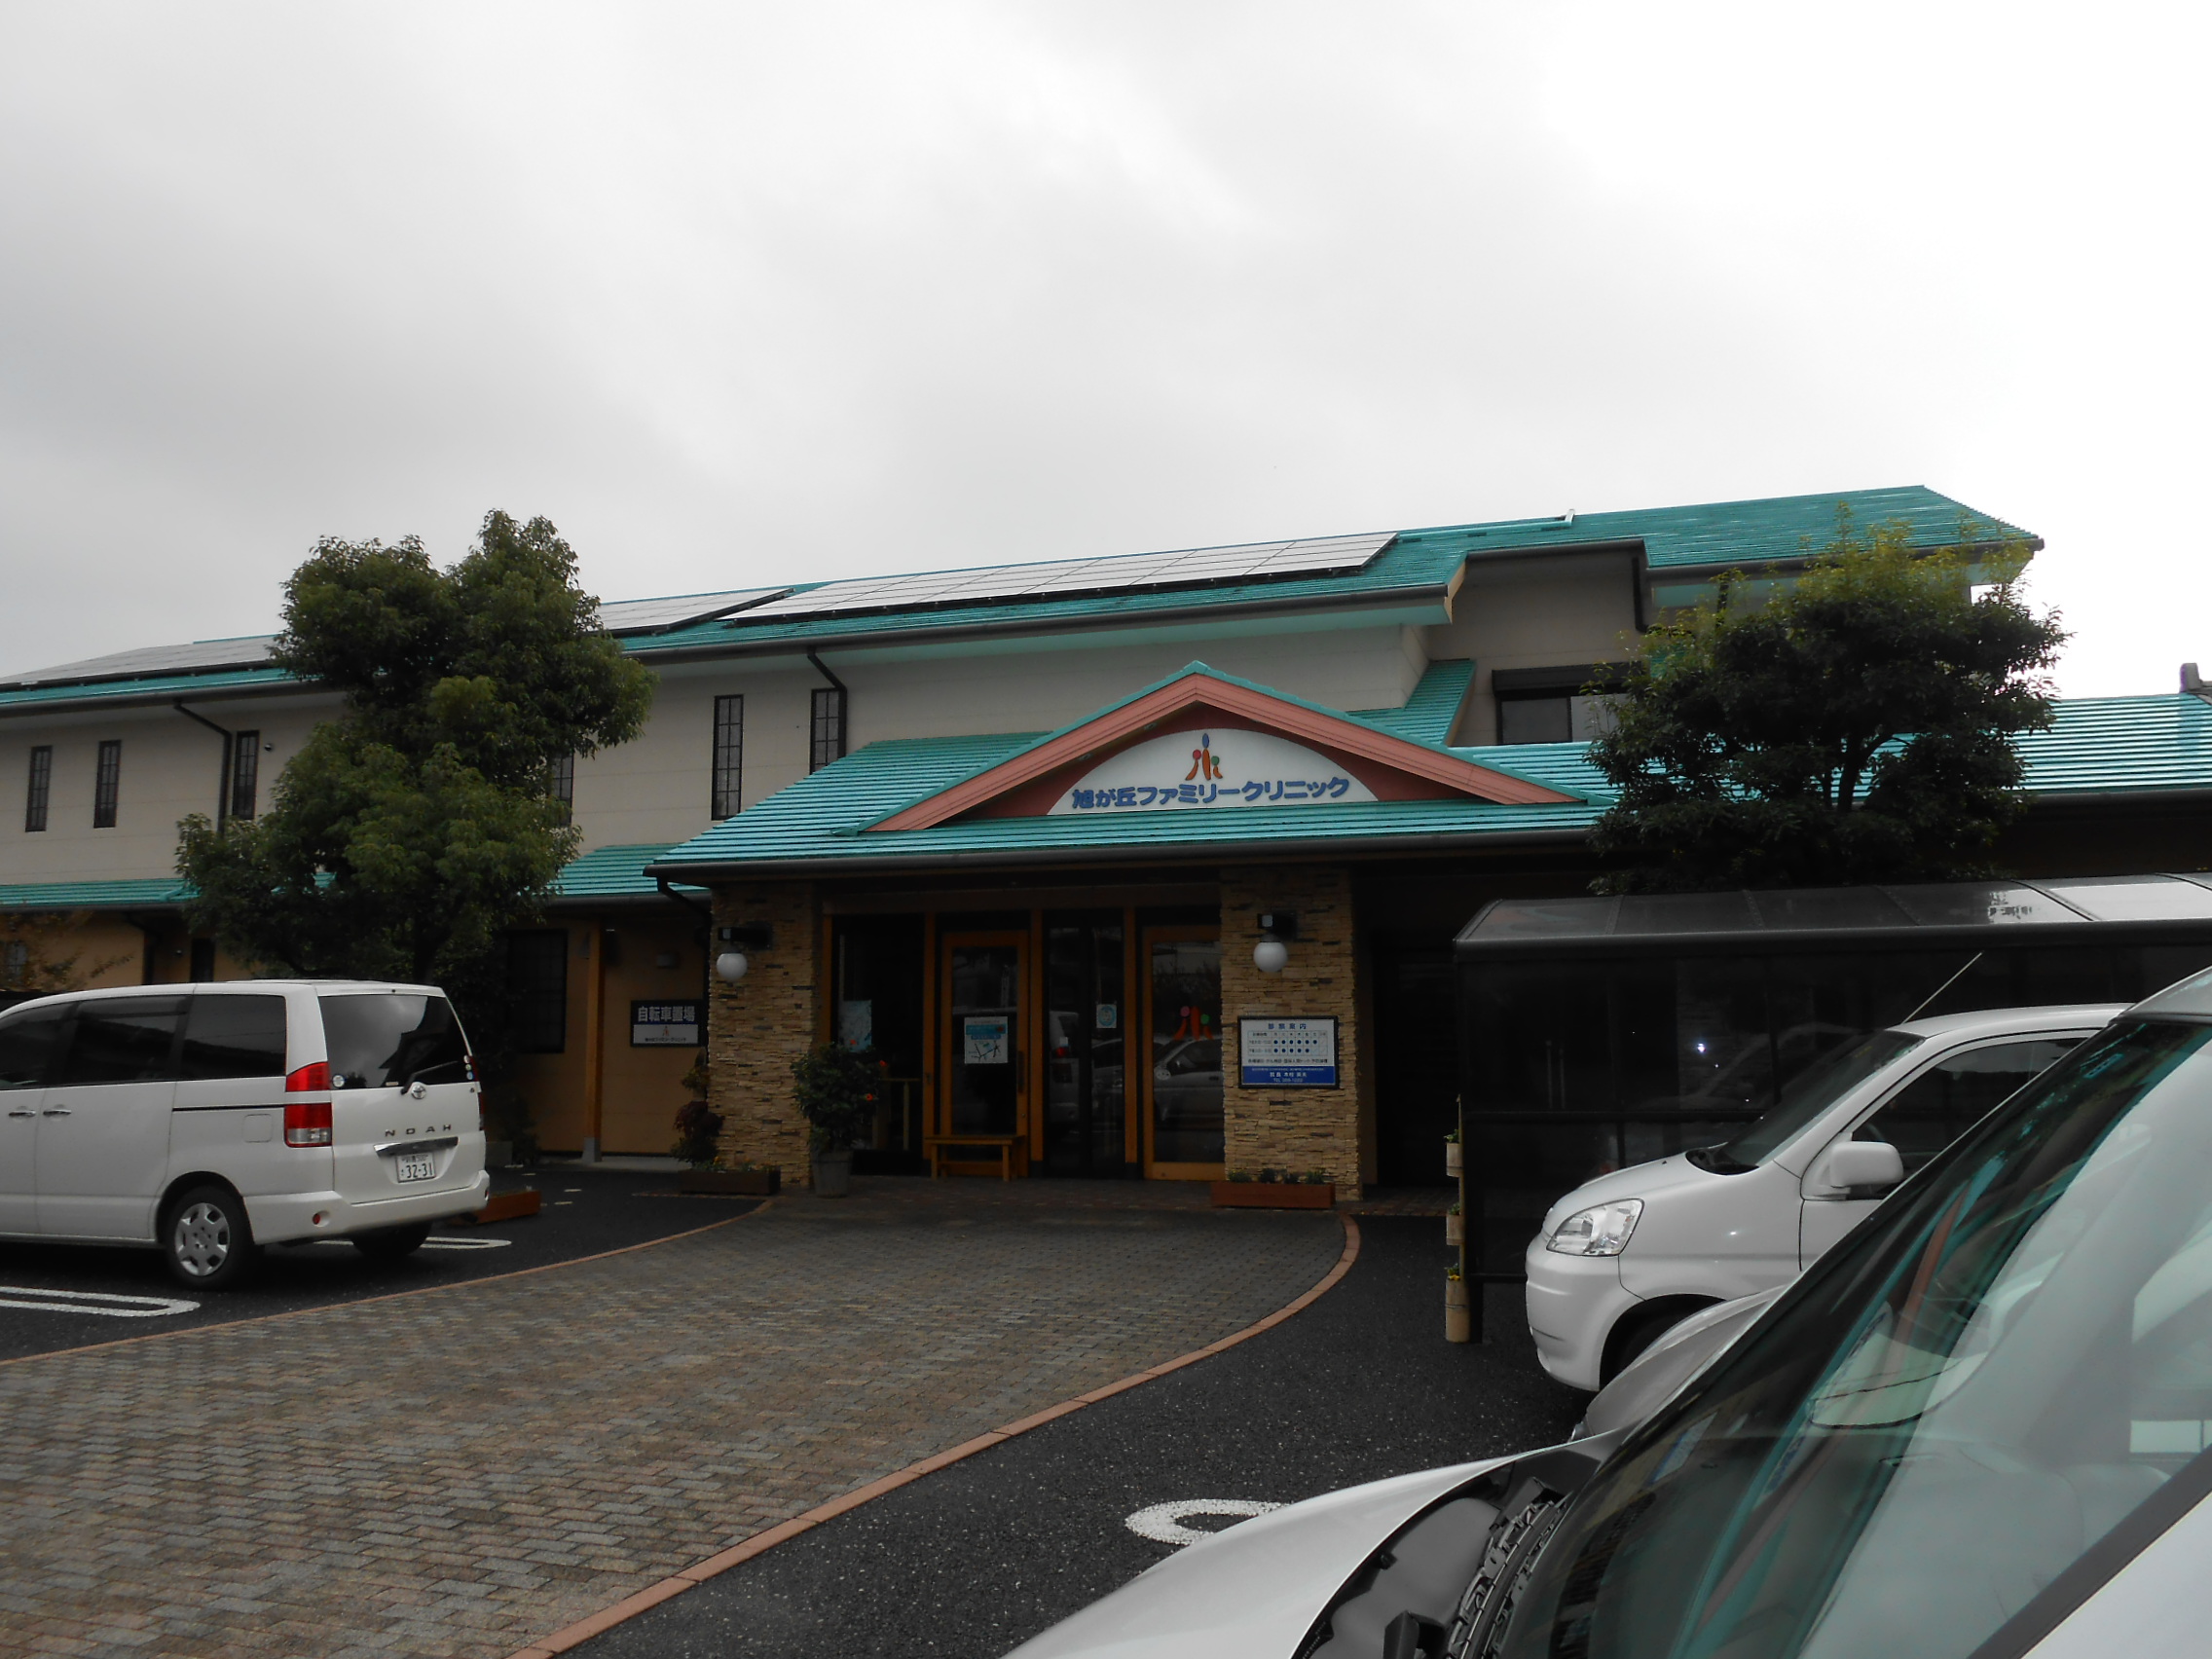 Hospital. 480m until Asahigaoka family clinic (hospital)